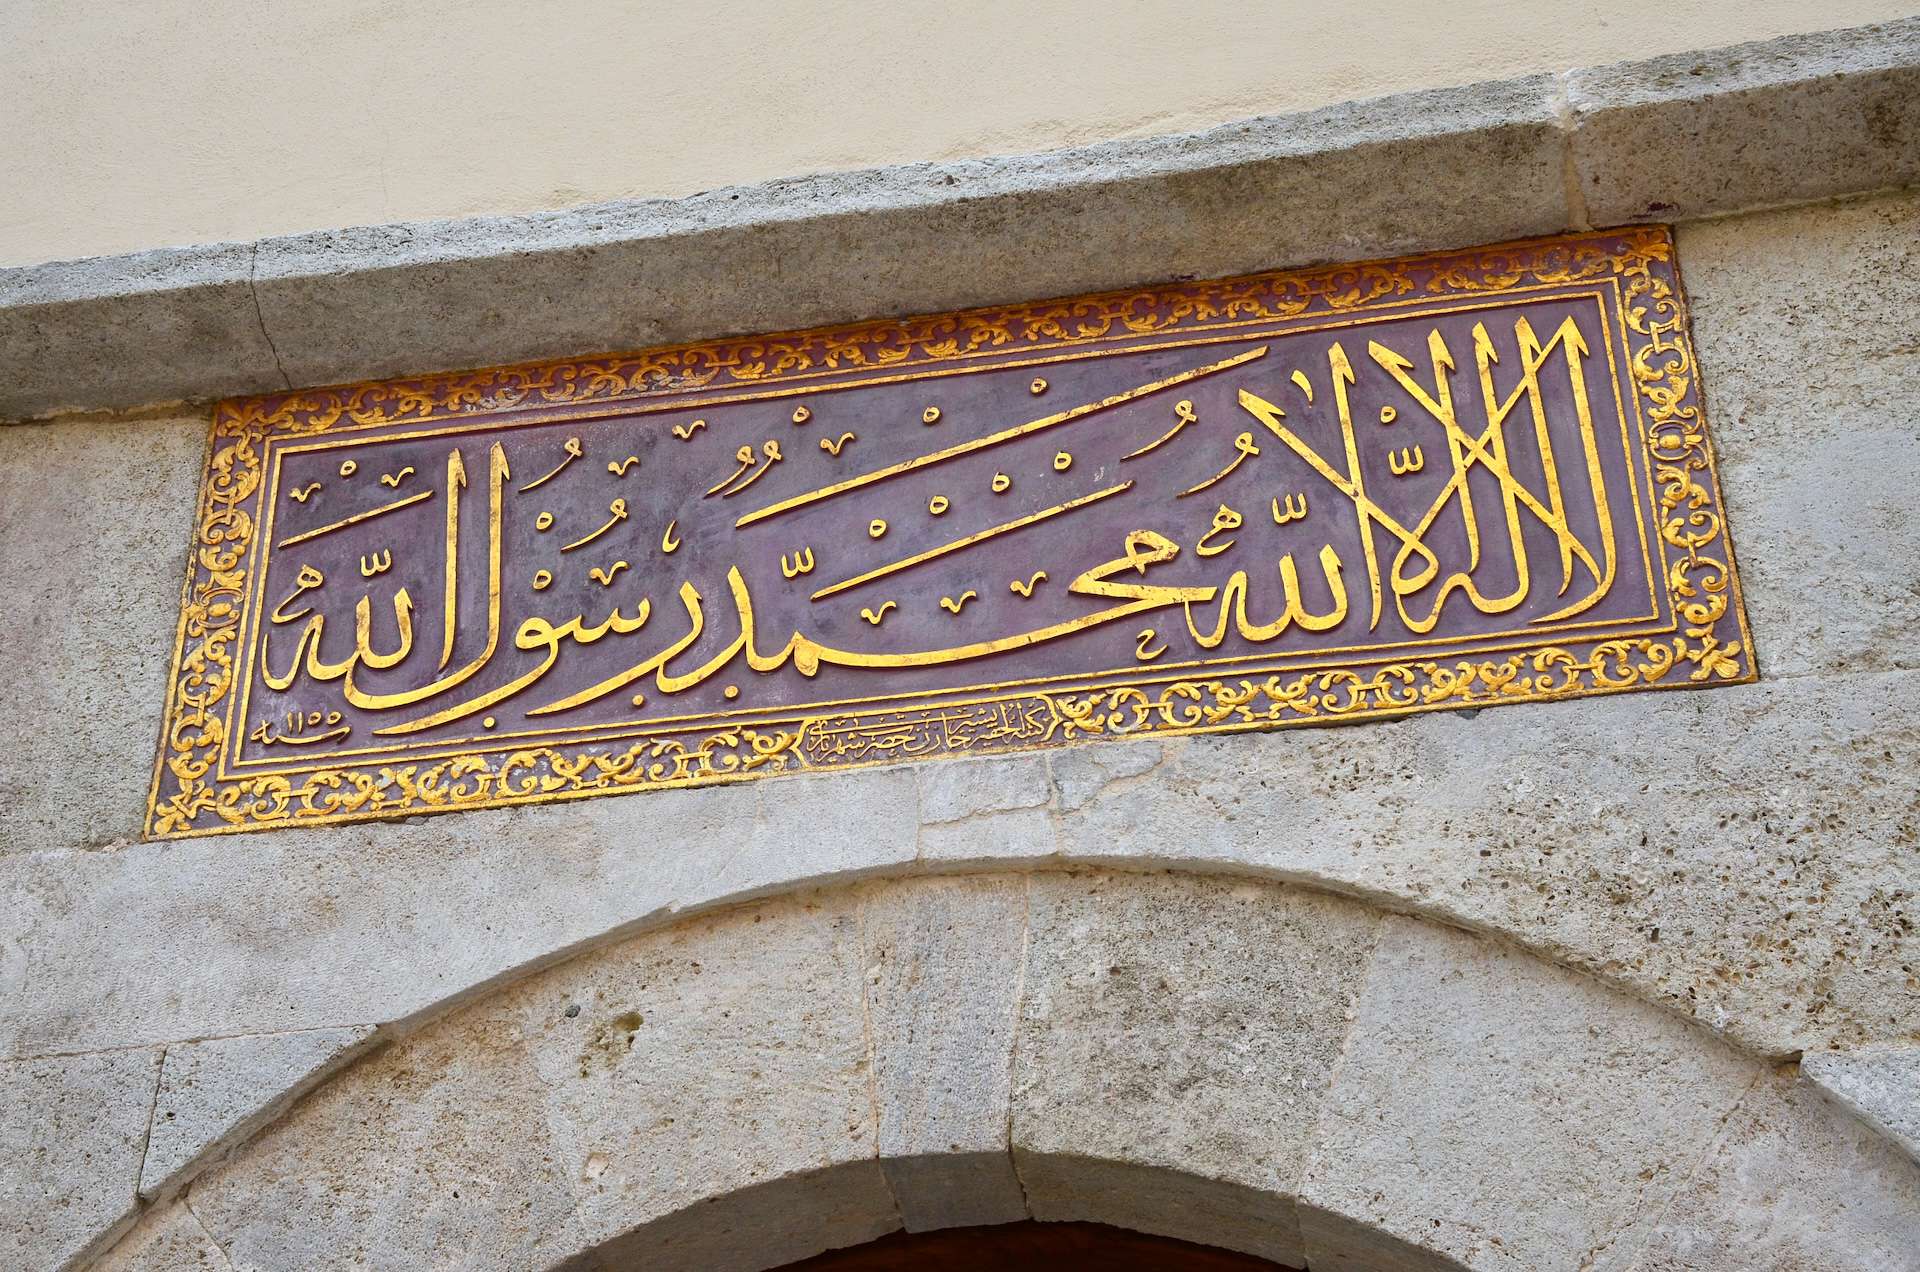 Inscription above the entrance to the Treasury at Hagia Sophia in Istanbul, Turkey